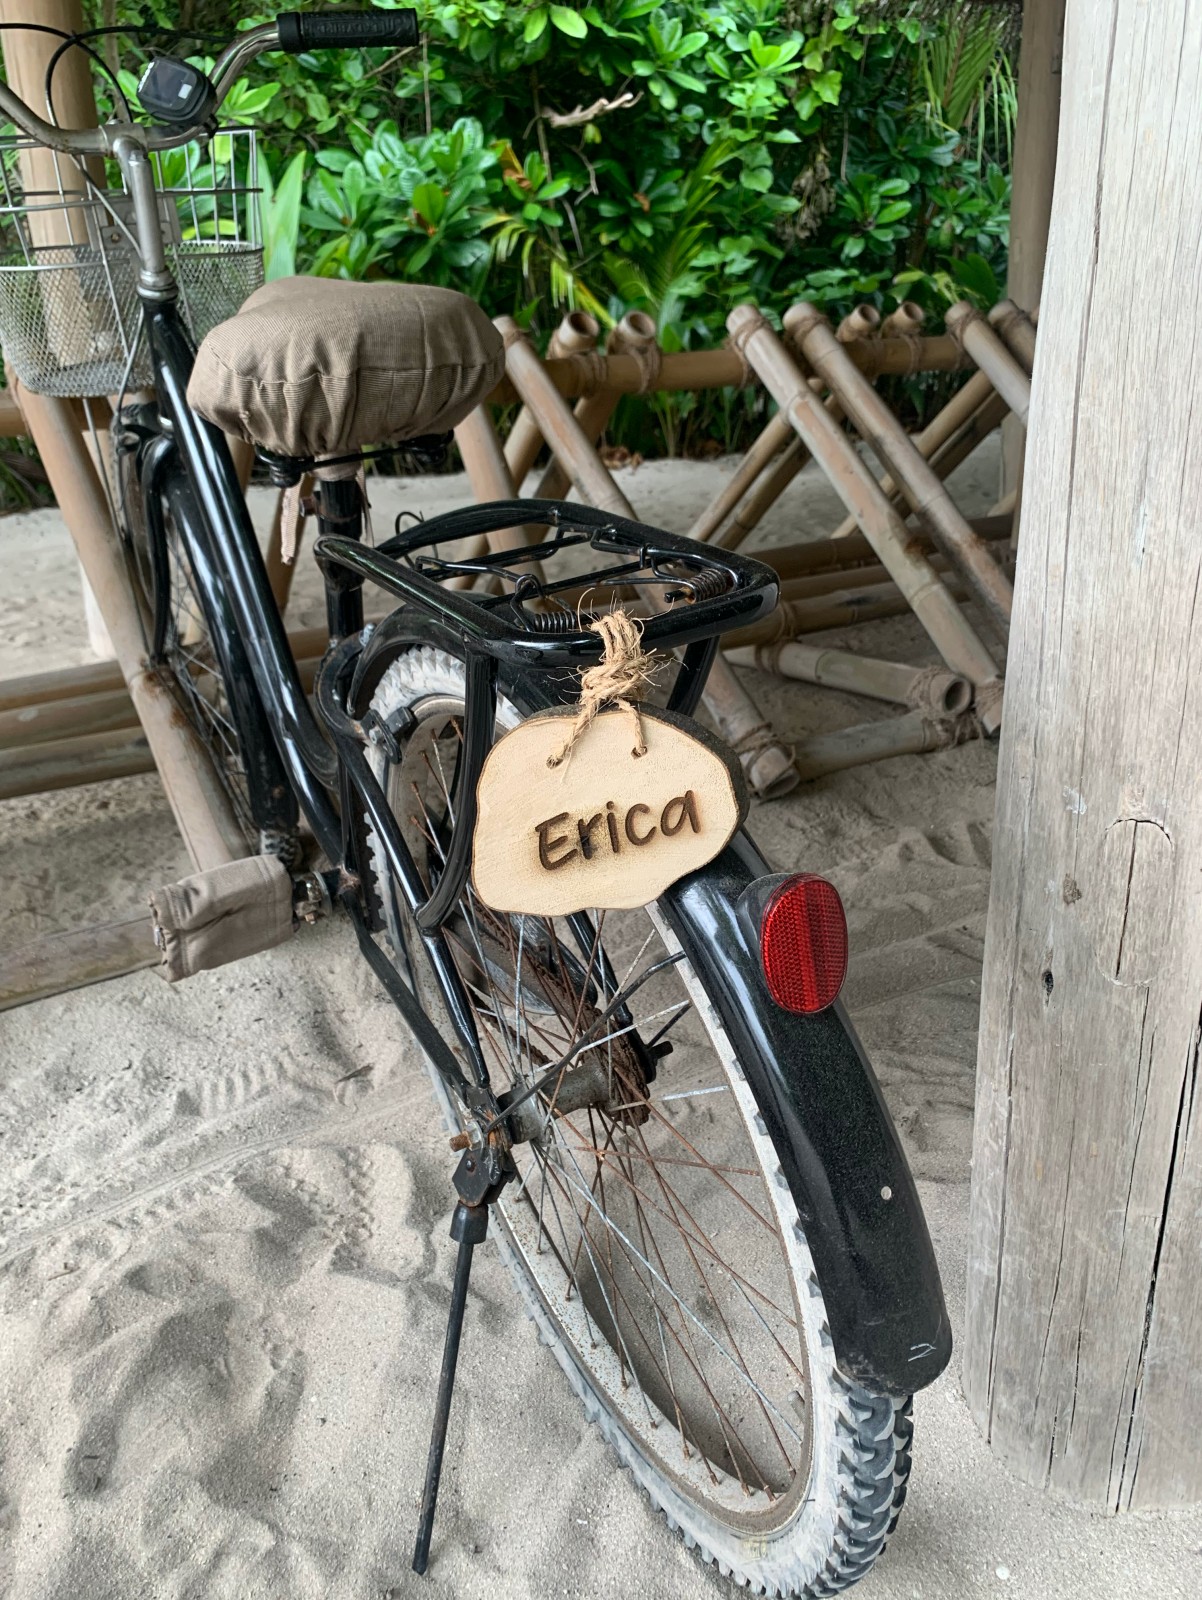 Erica's bicycle